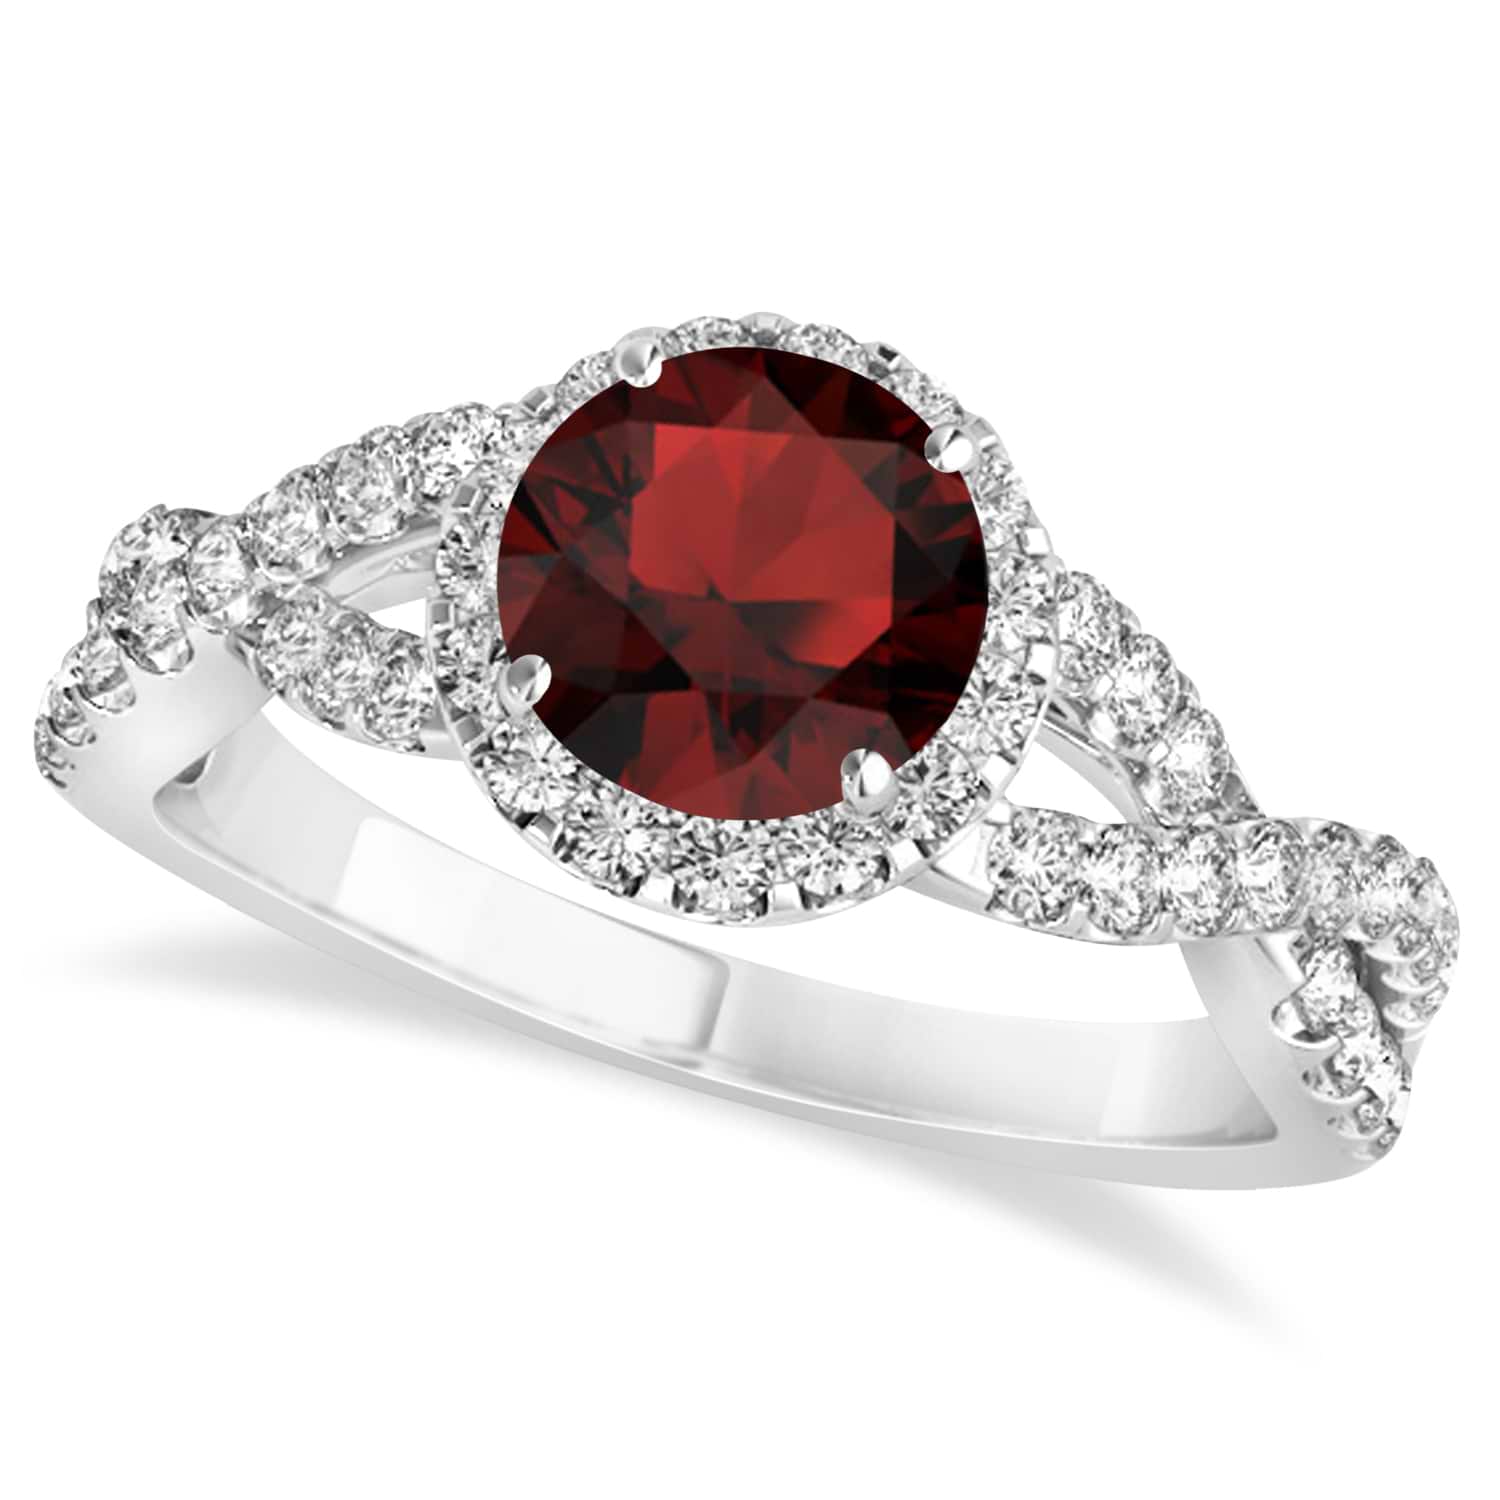 Garnet & Diamond Twisted Engagement Ring Palladium 1.50ct